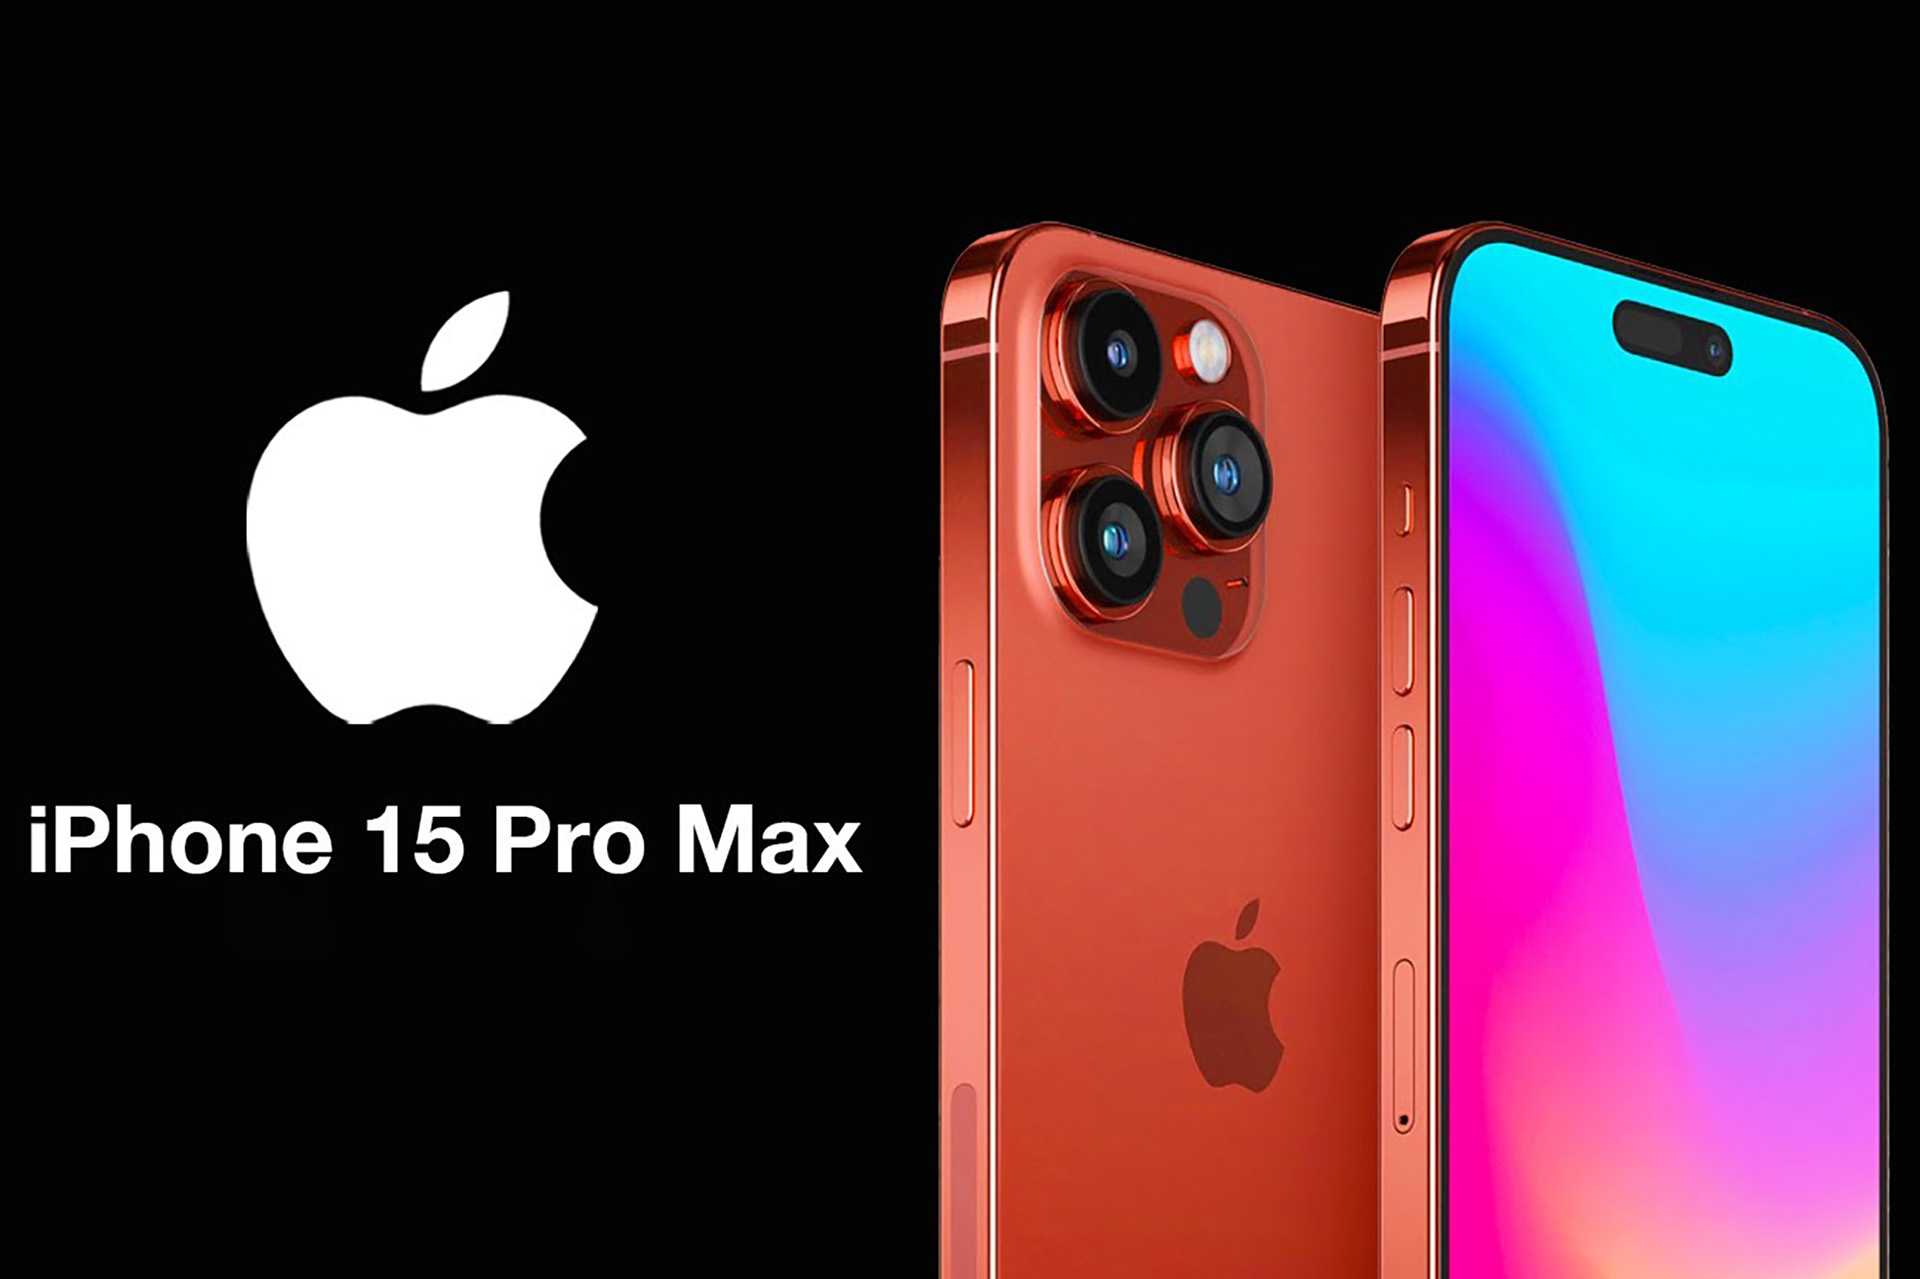 iPhone 15 Pro Max news